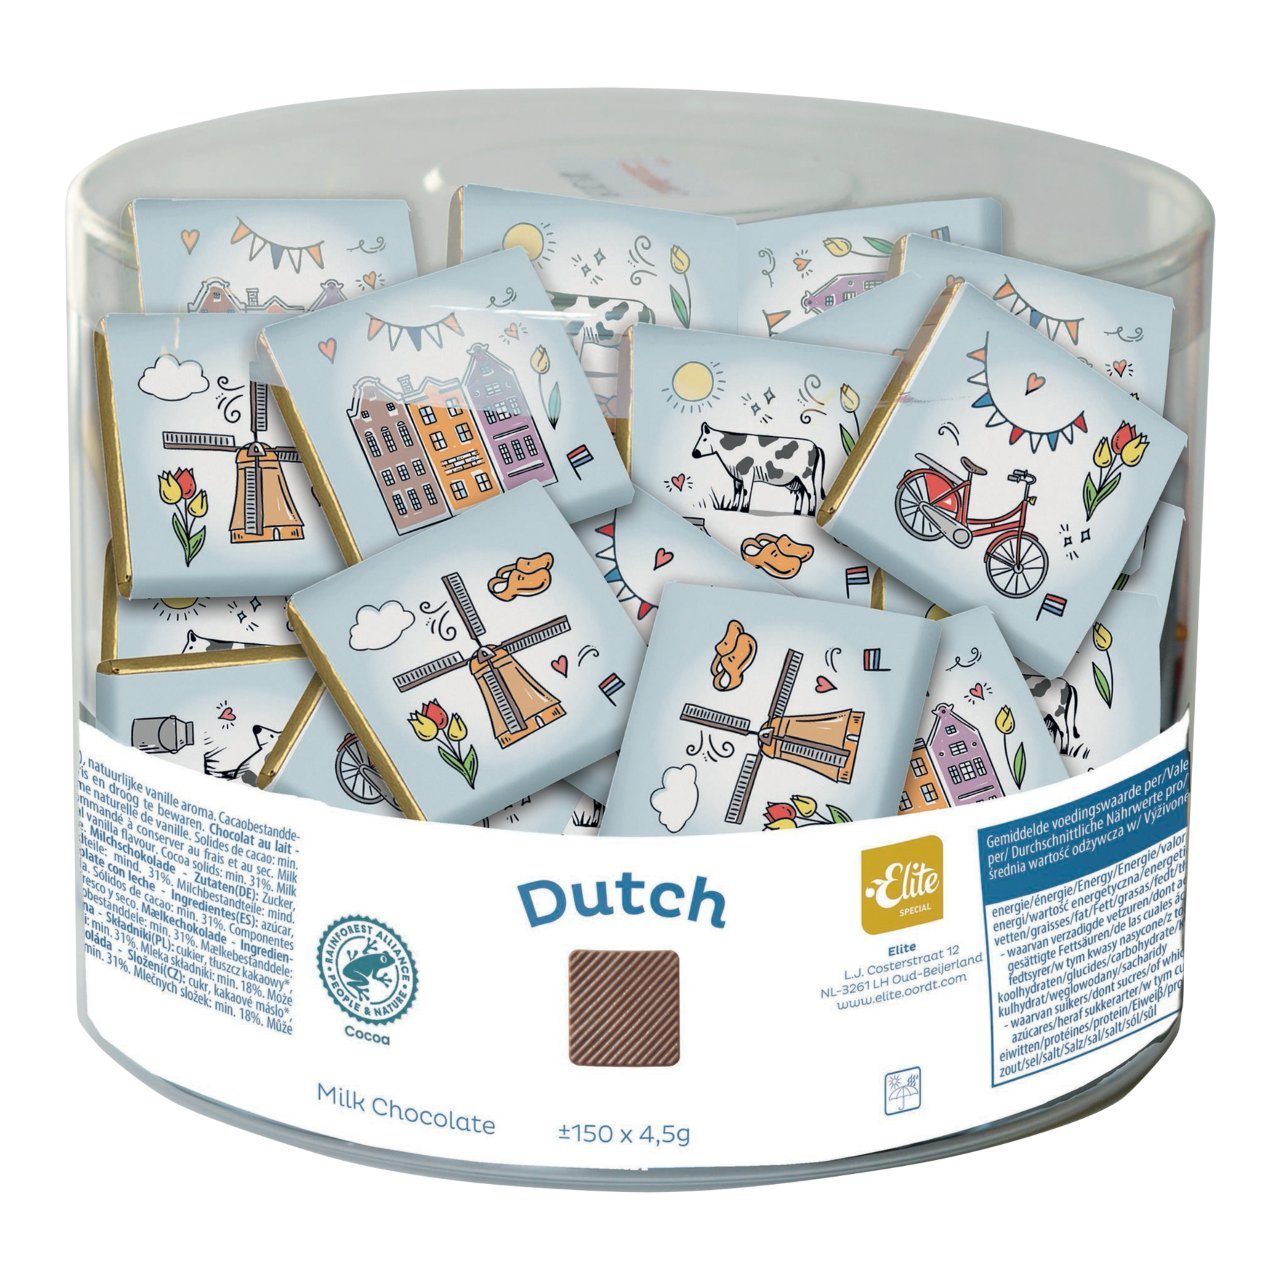 Dutch melk chocolade